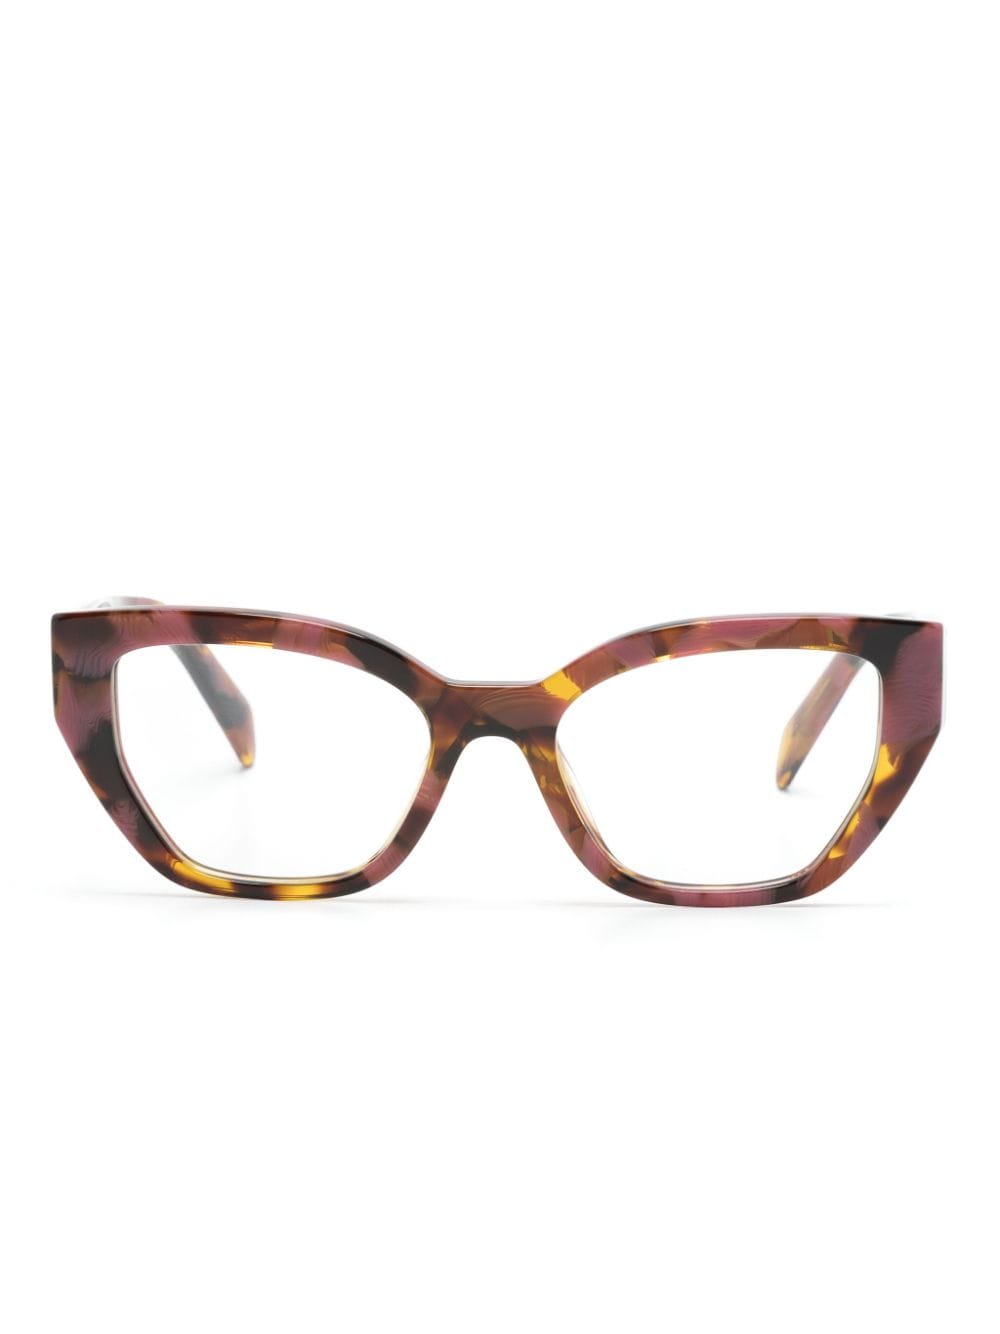 Prada Tortoiseshell Cat-eye Glasses In Pink